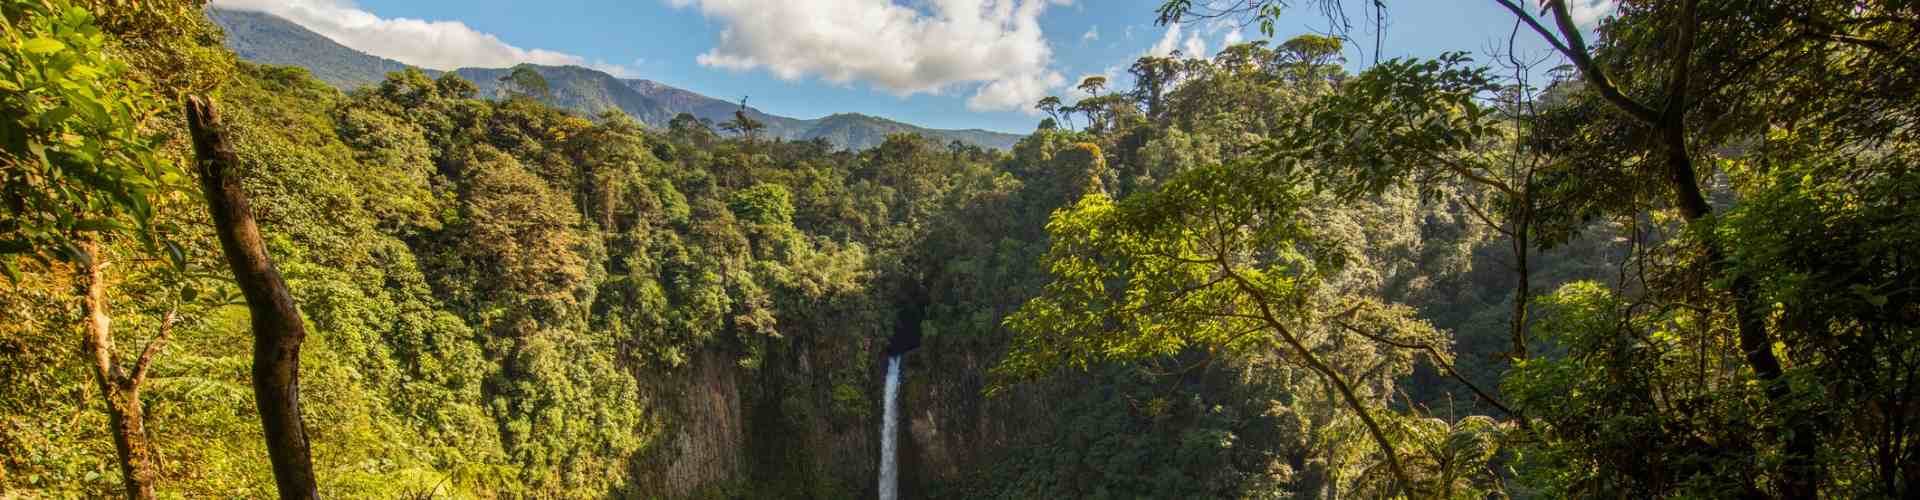 A waterfall in Costa Rica